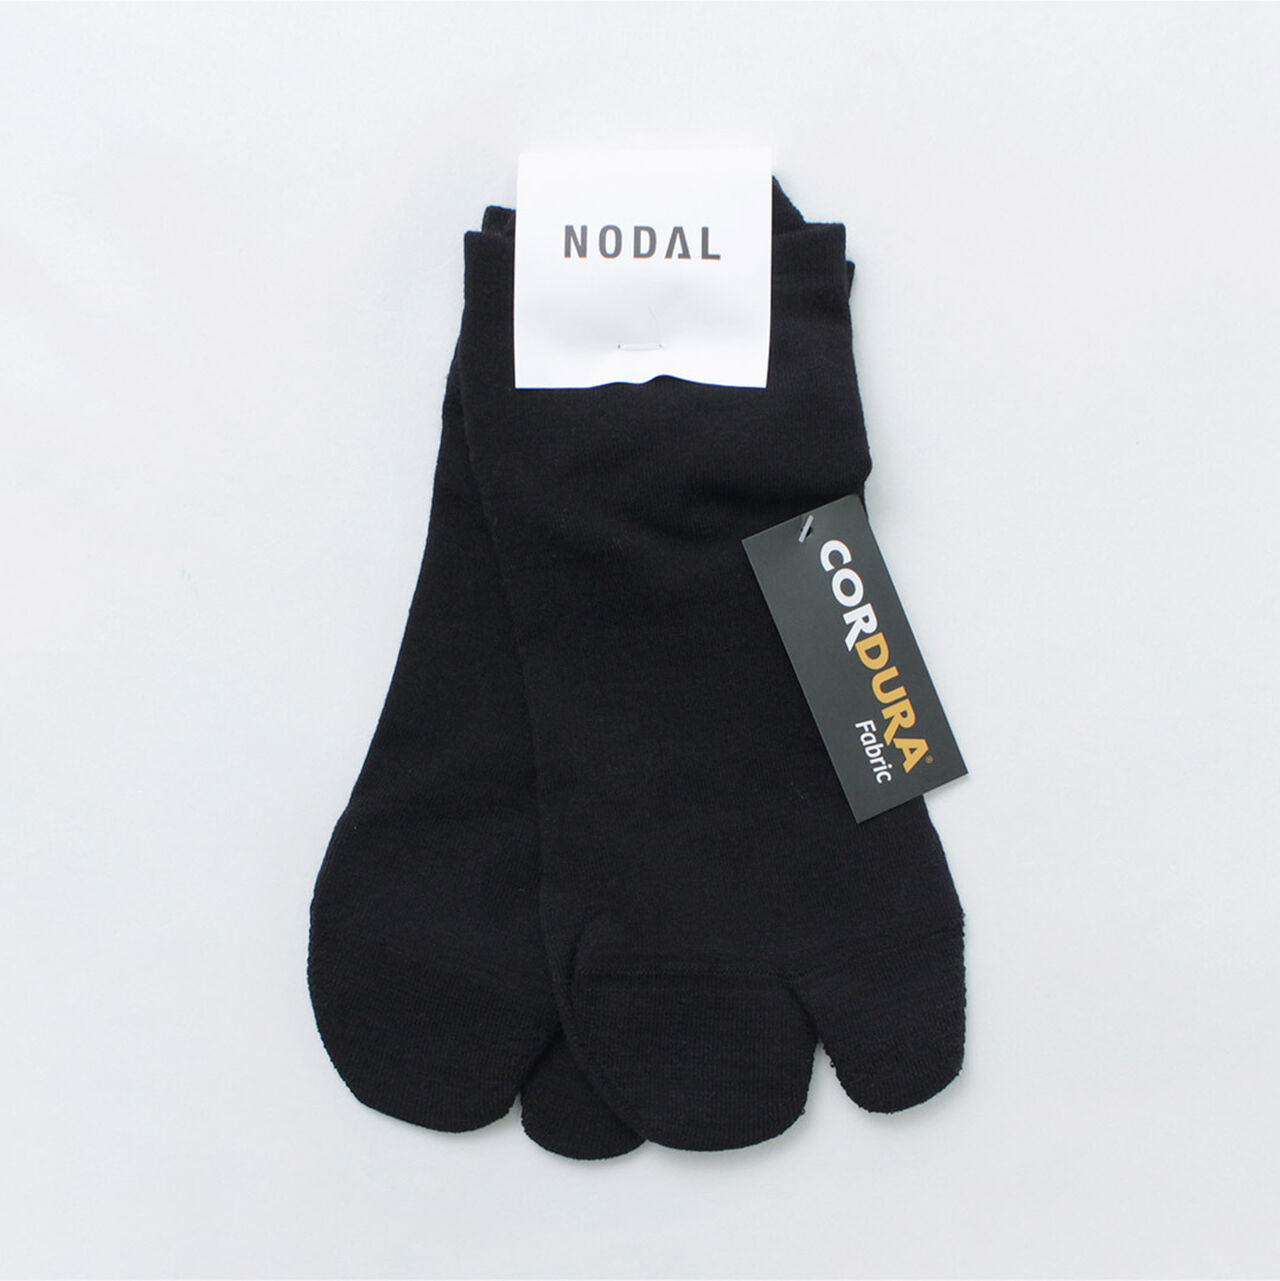 Cordura 60/40 Ankle Socks,Black, large image number 0